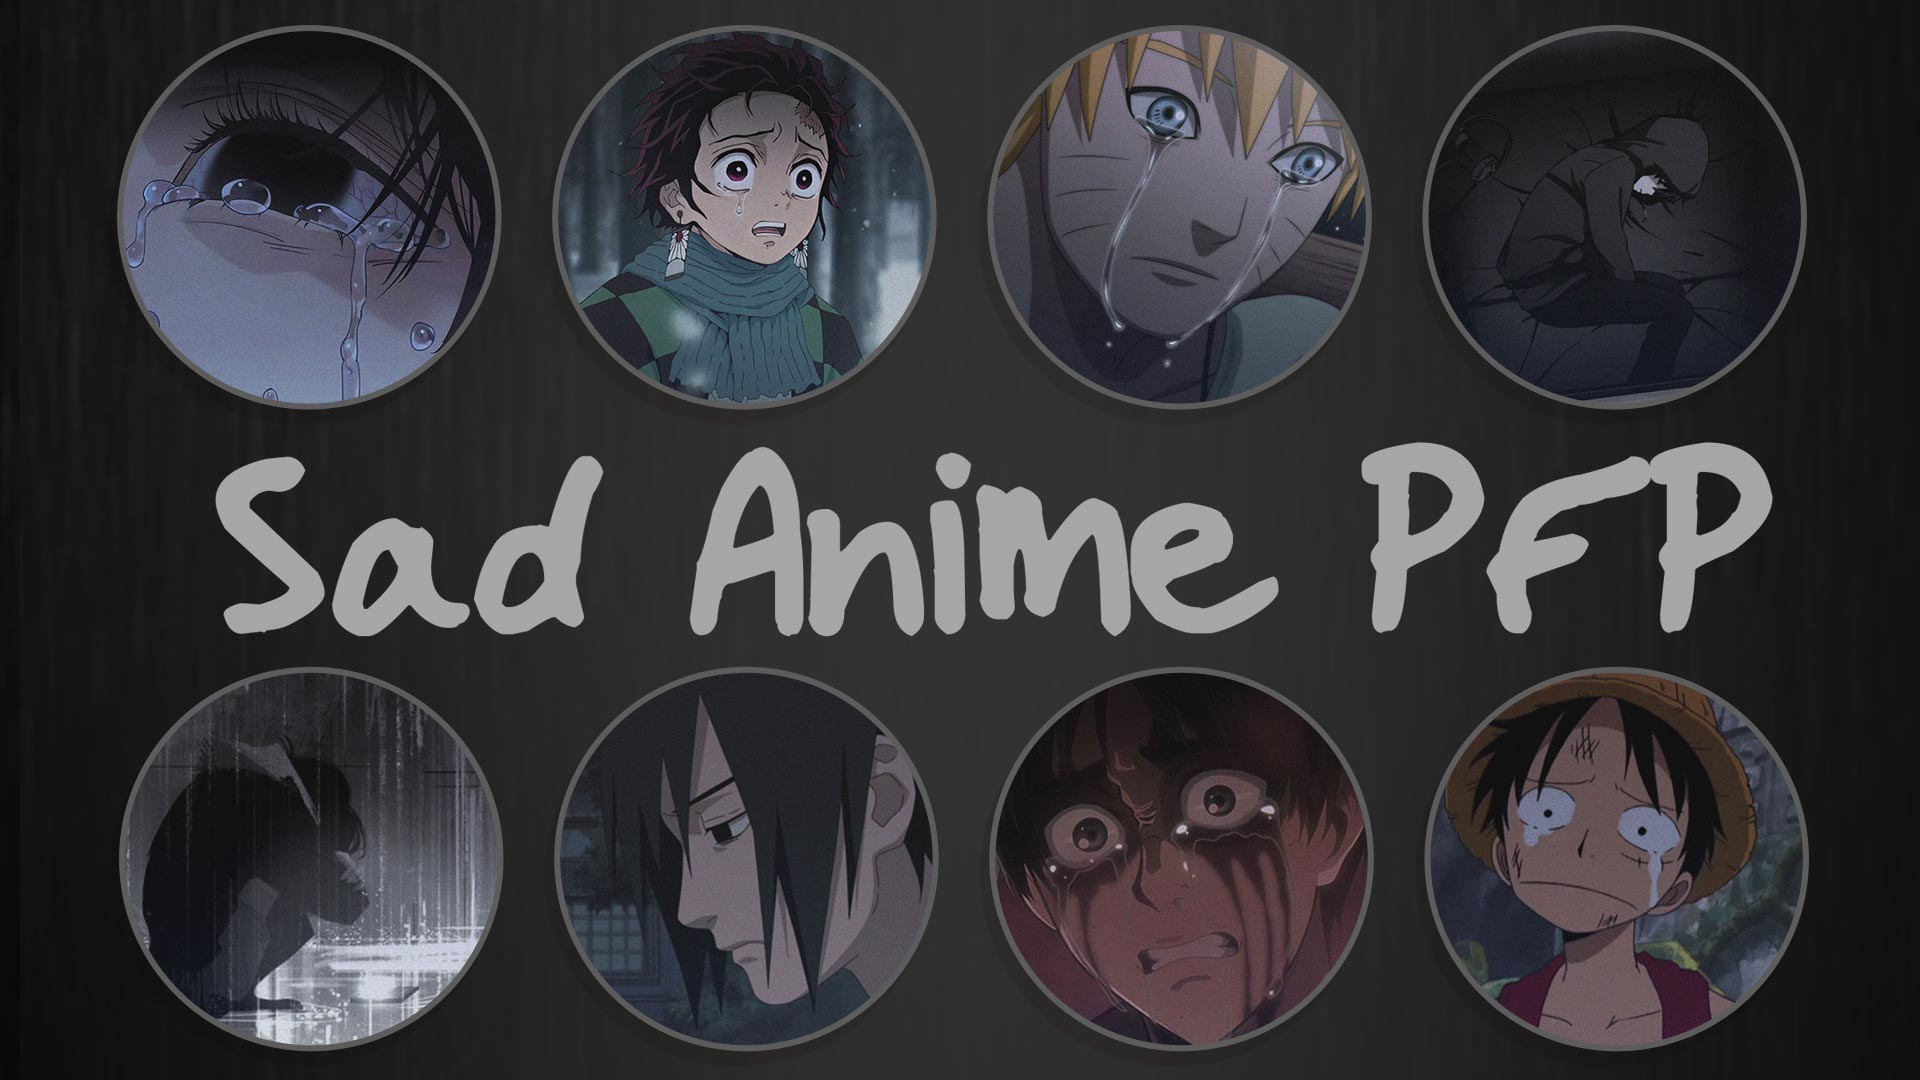 sad anime pfps